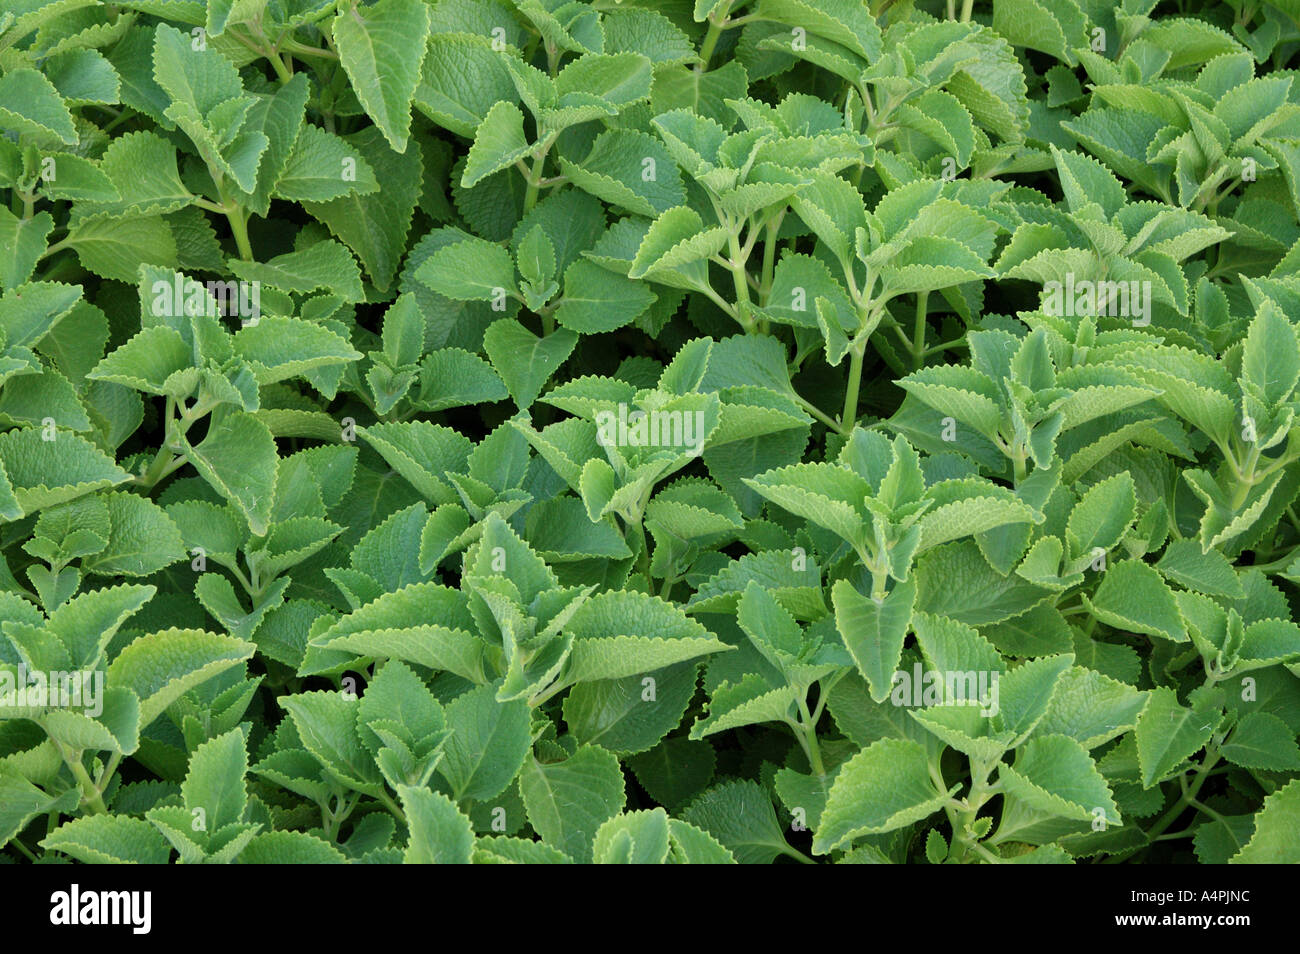 ANG77769 Pan Ova Pashanabhedi Coleus aromaticus Lamiaceae Green thick leafs Fragrance Aroma Medicinal Use Stock Photo